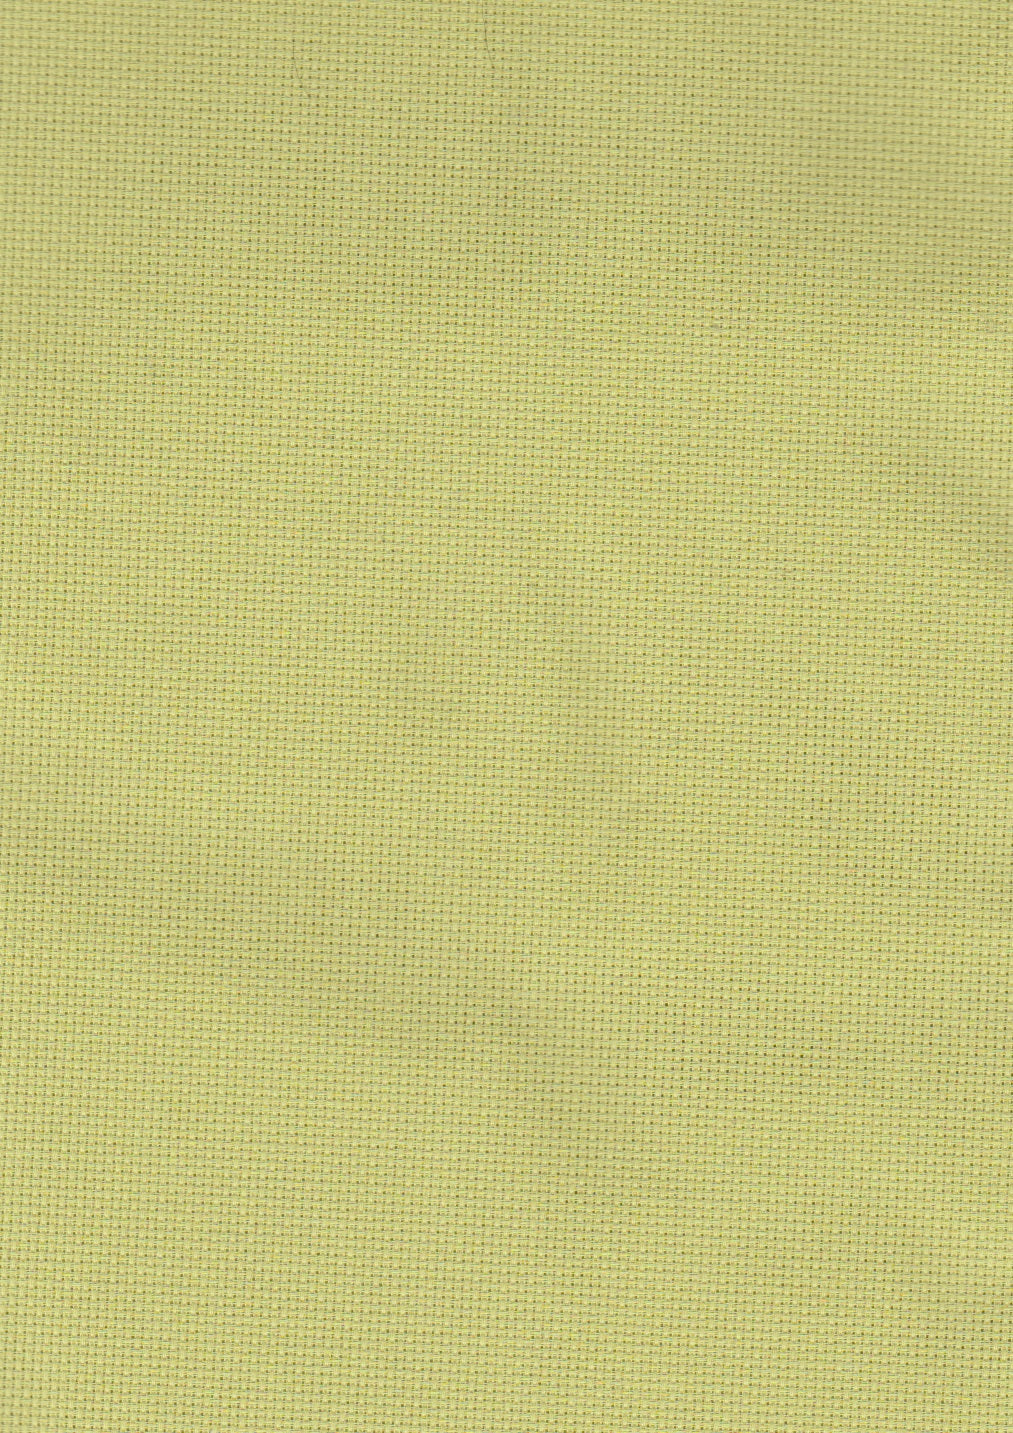 Aida 16ct 18x25 Tropical Green Fabric